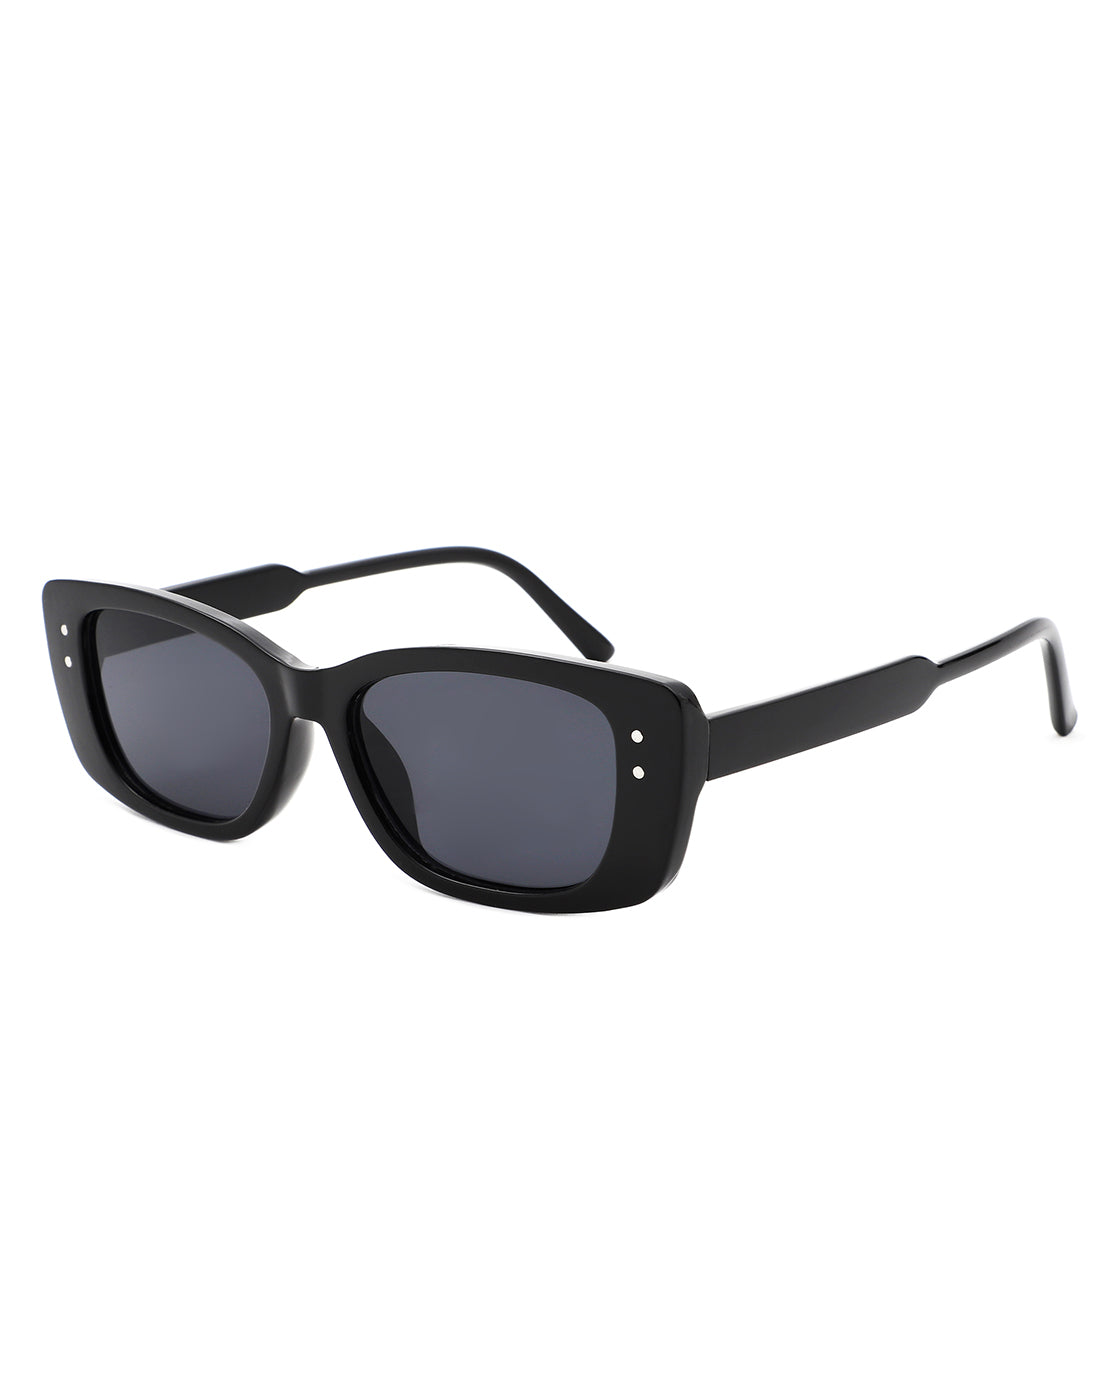 Kaelith - Cramilo Retro Rectangle Narrow Square Frame Women's Fashion Sunglasses